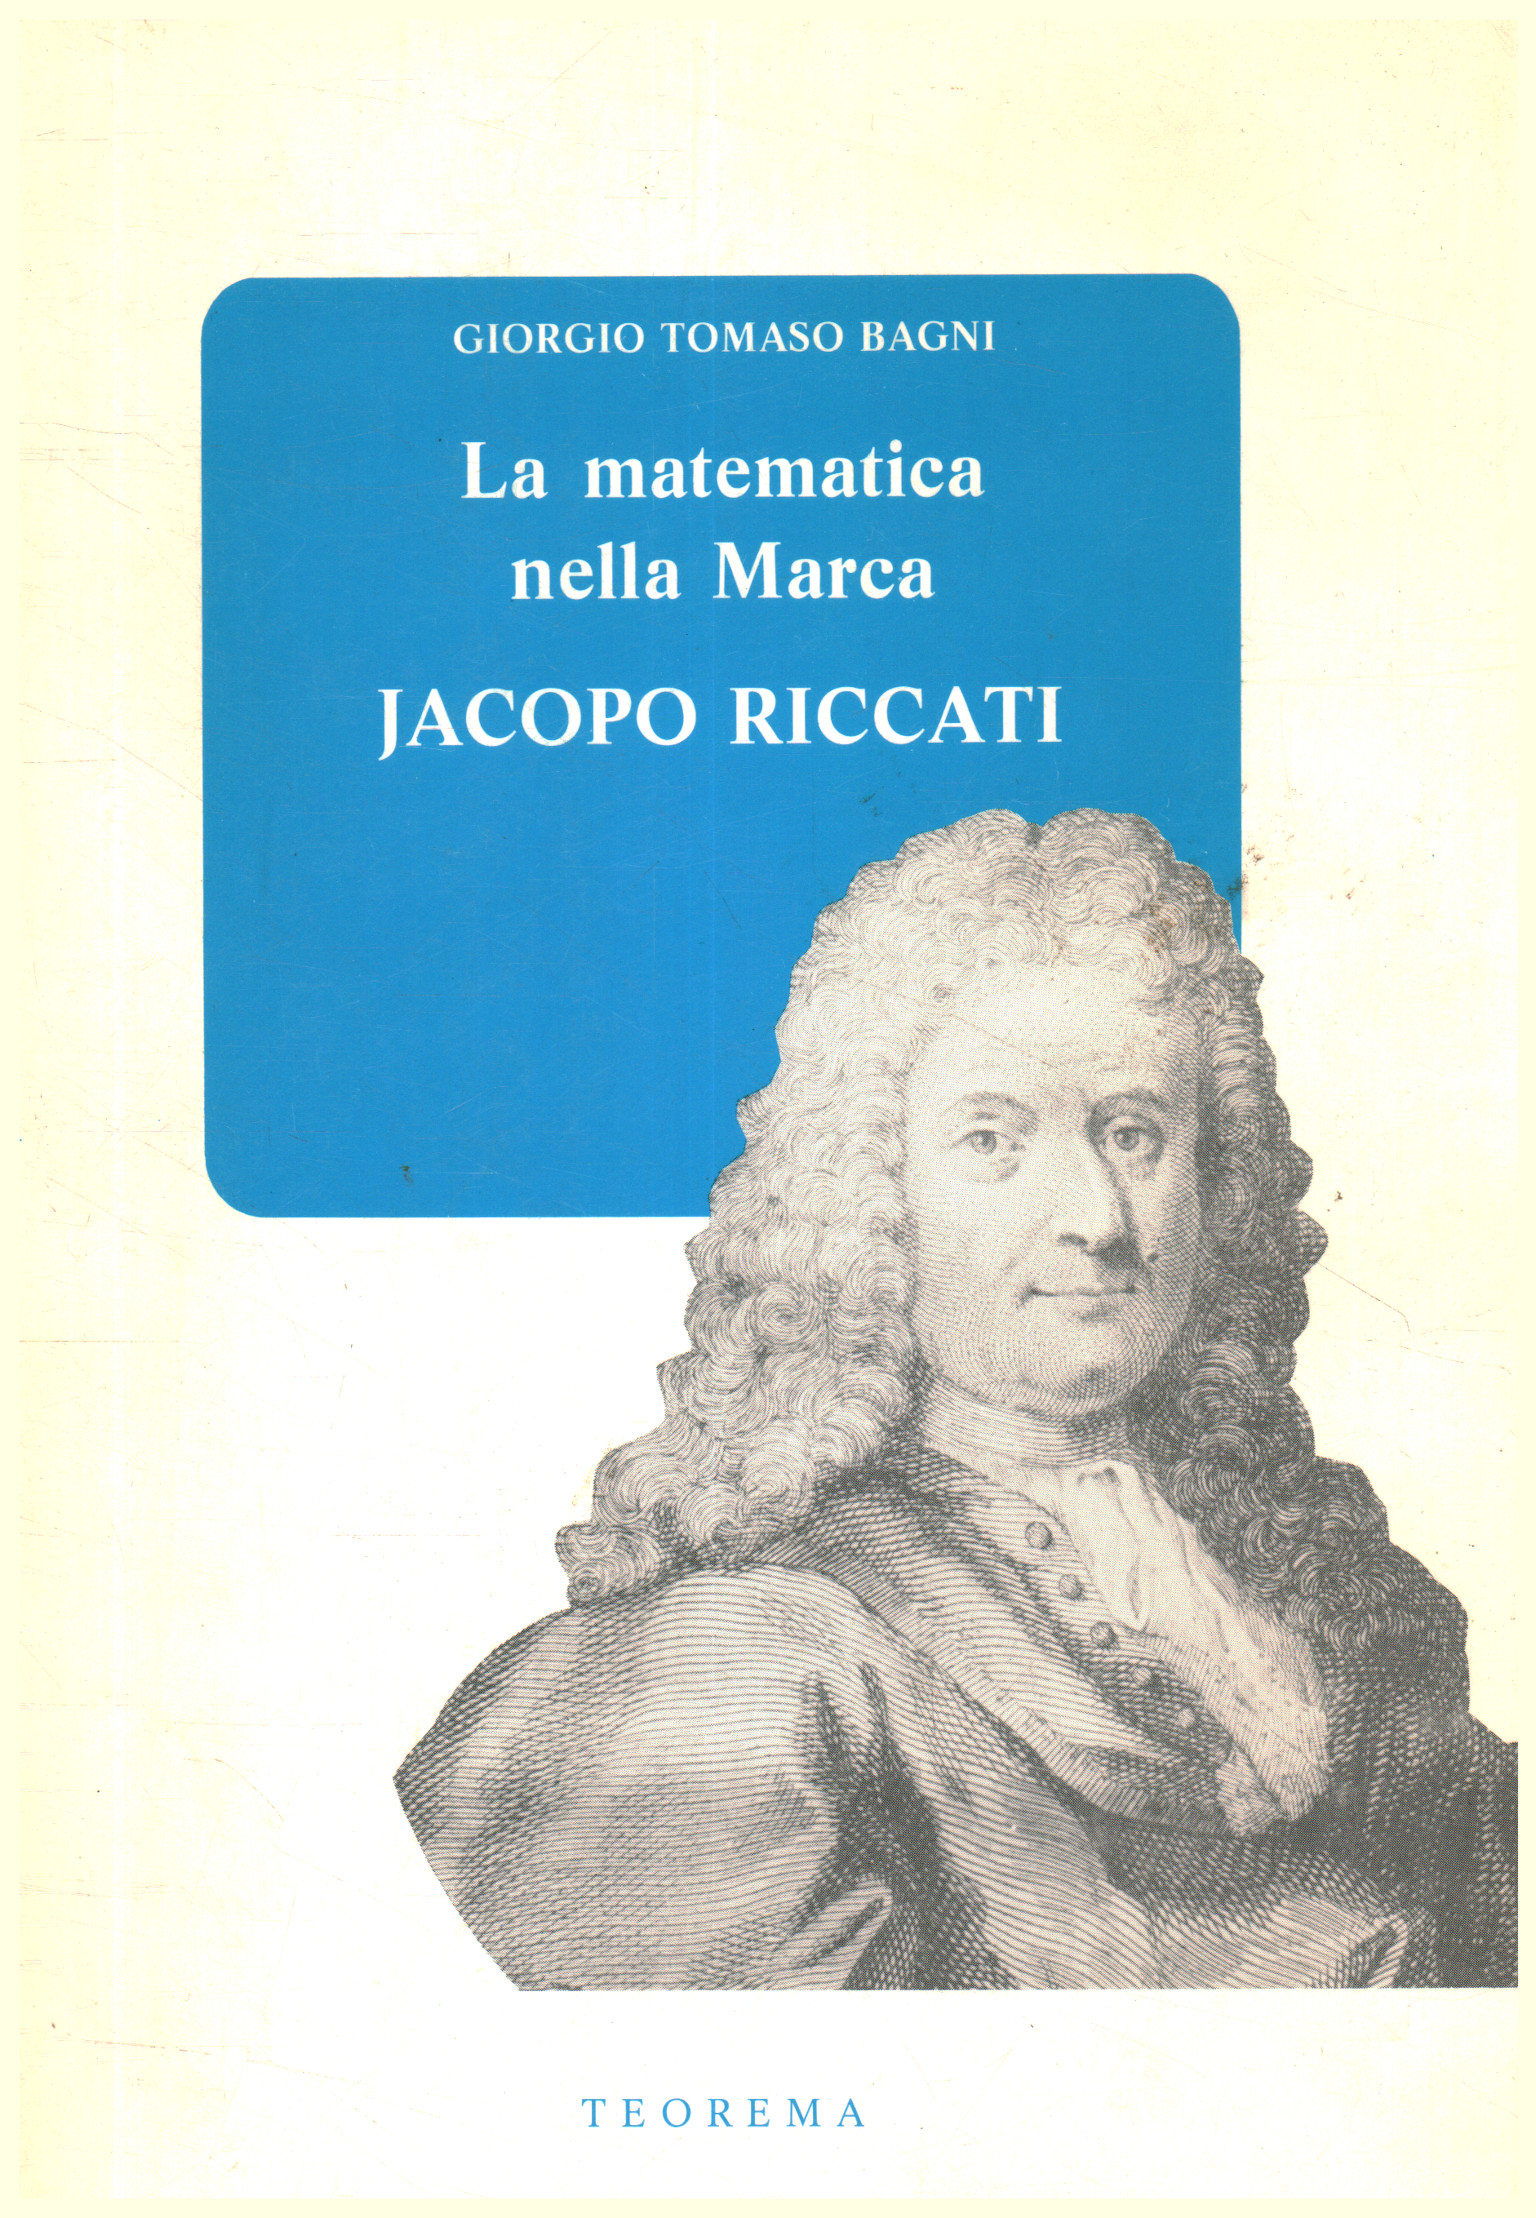 Mathematics in the Brand: Jacopo Riccat